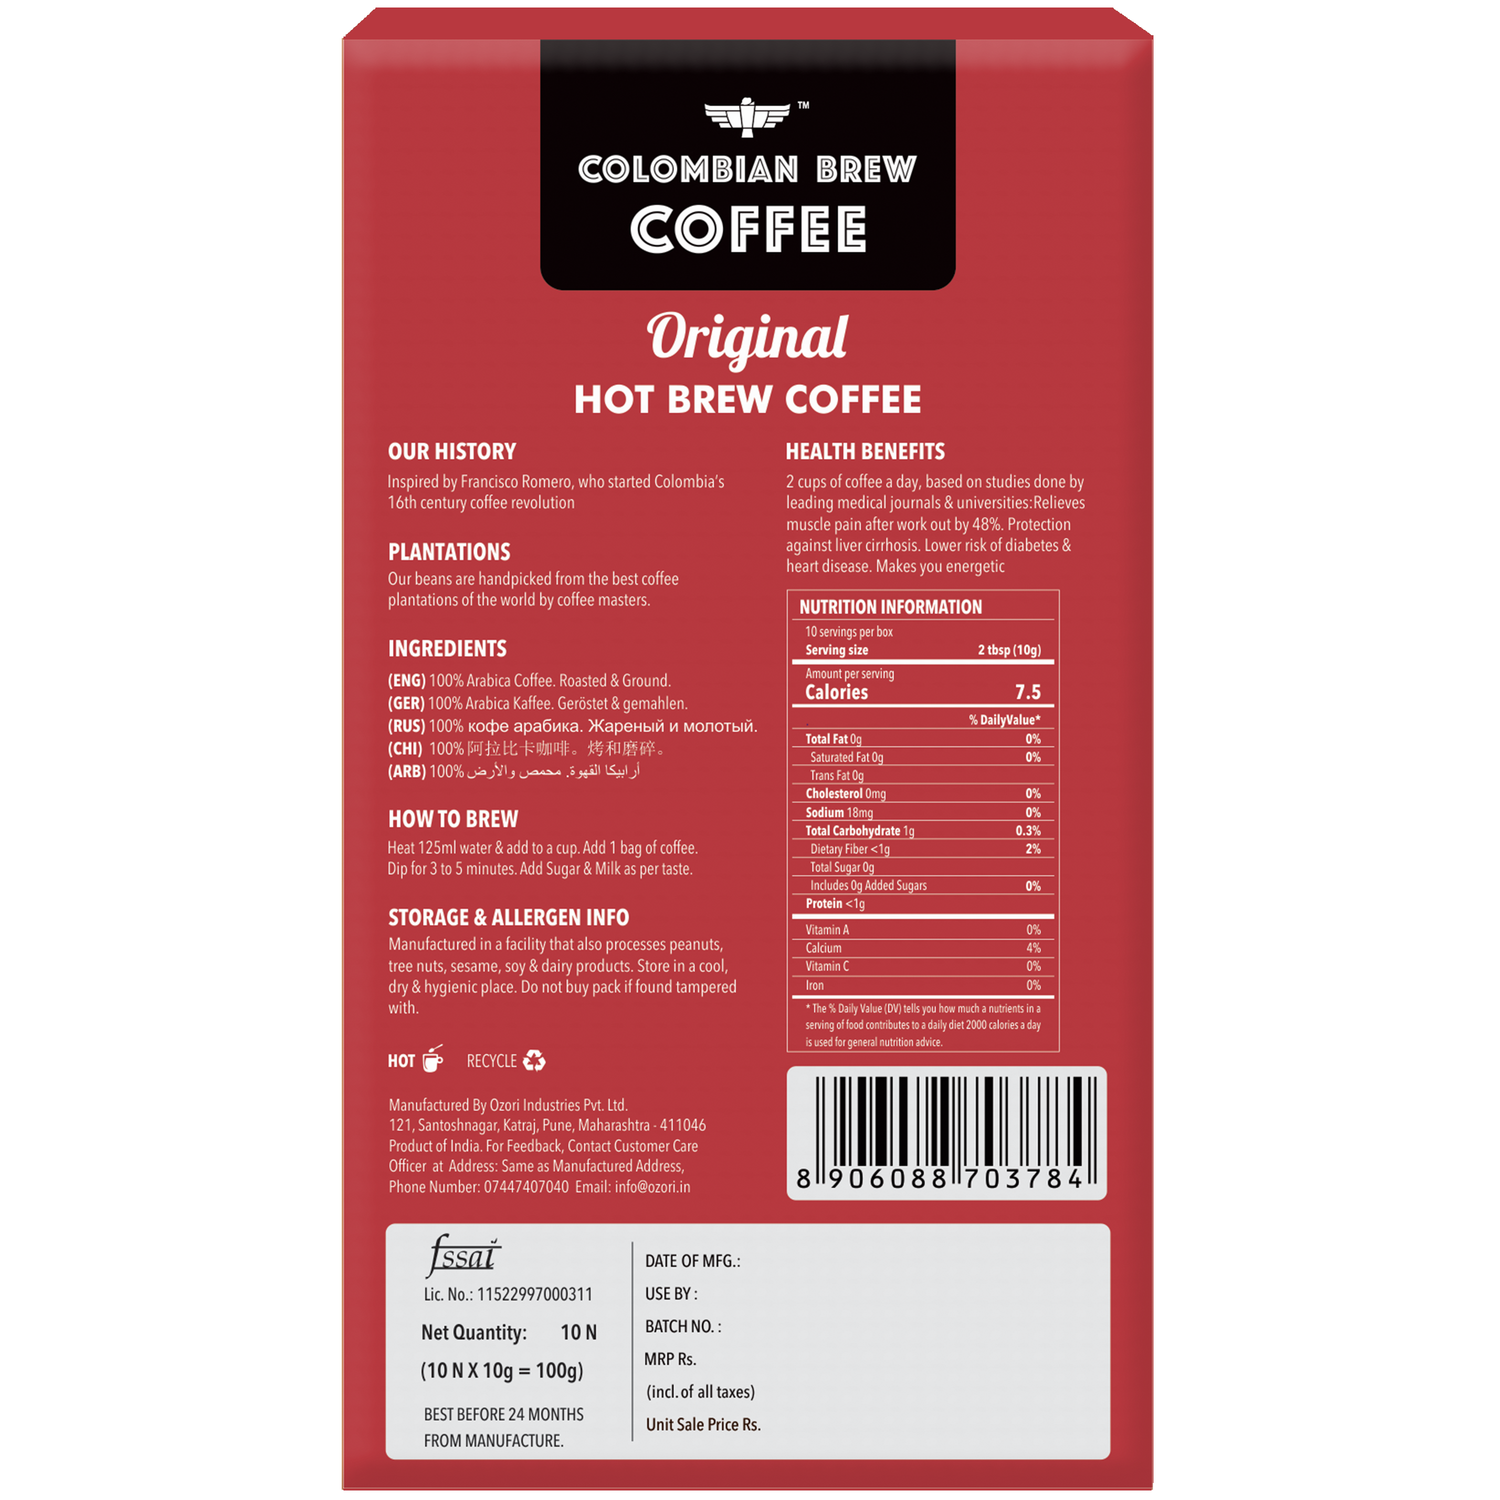 Colombain Brew Coffee Arabica Original Hot Brew 10 Bags, 10 Cups 